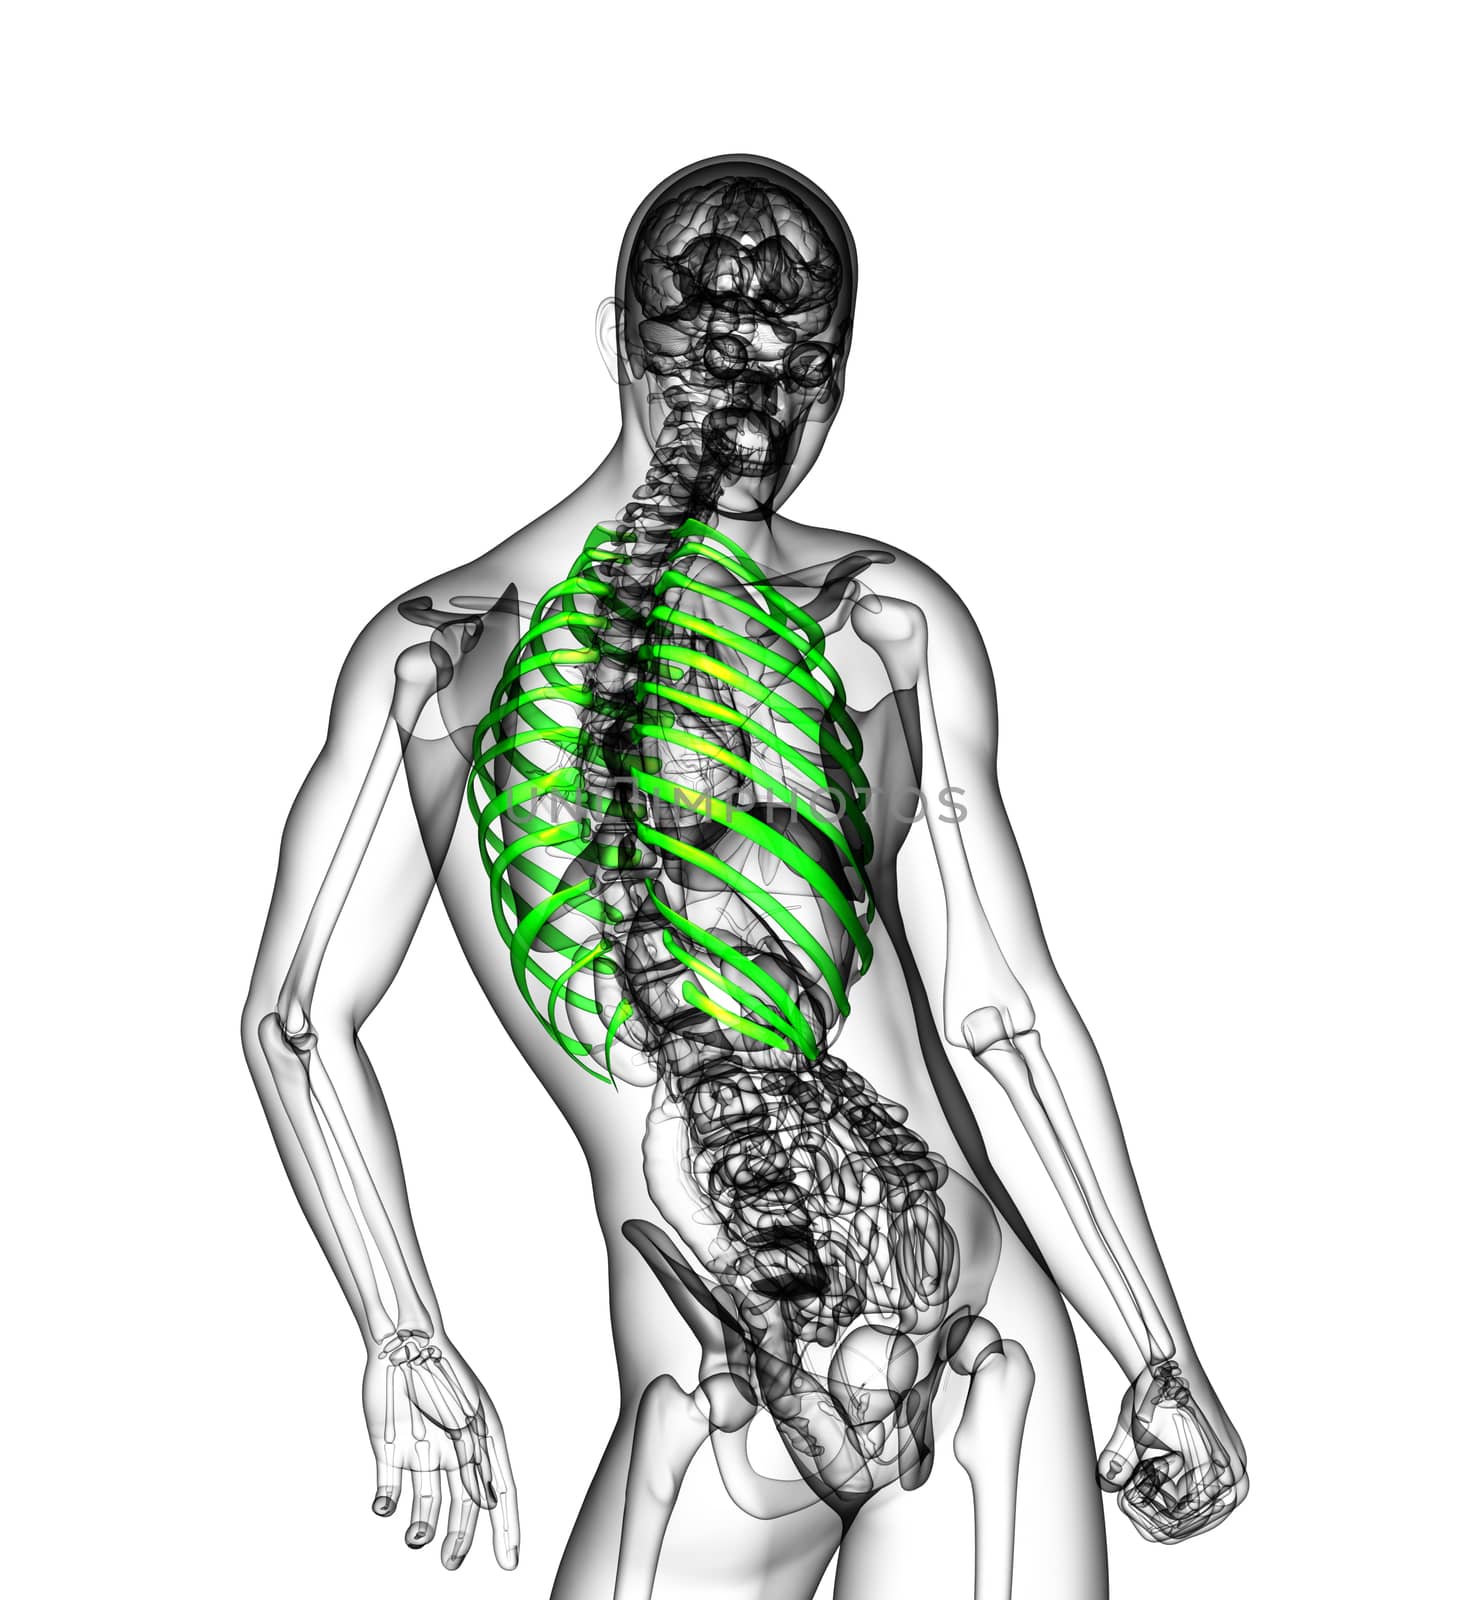 3d render medical illustration of the ribcage - side view